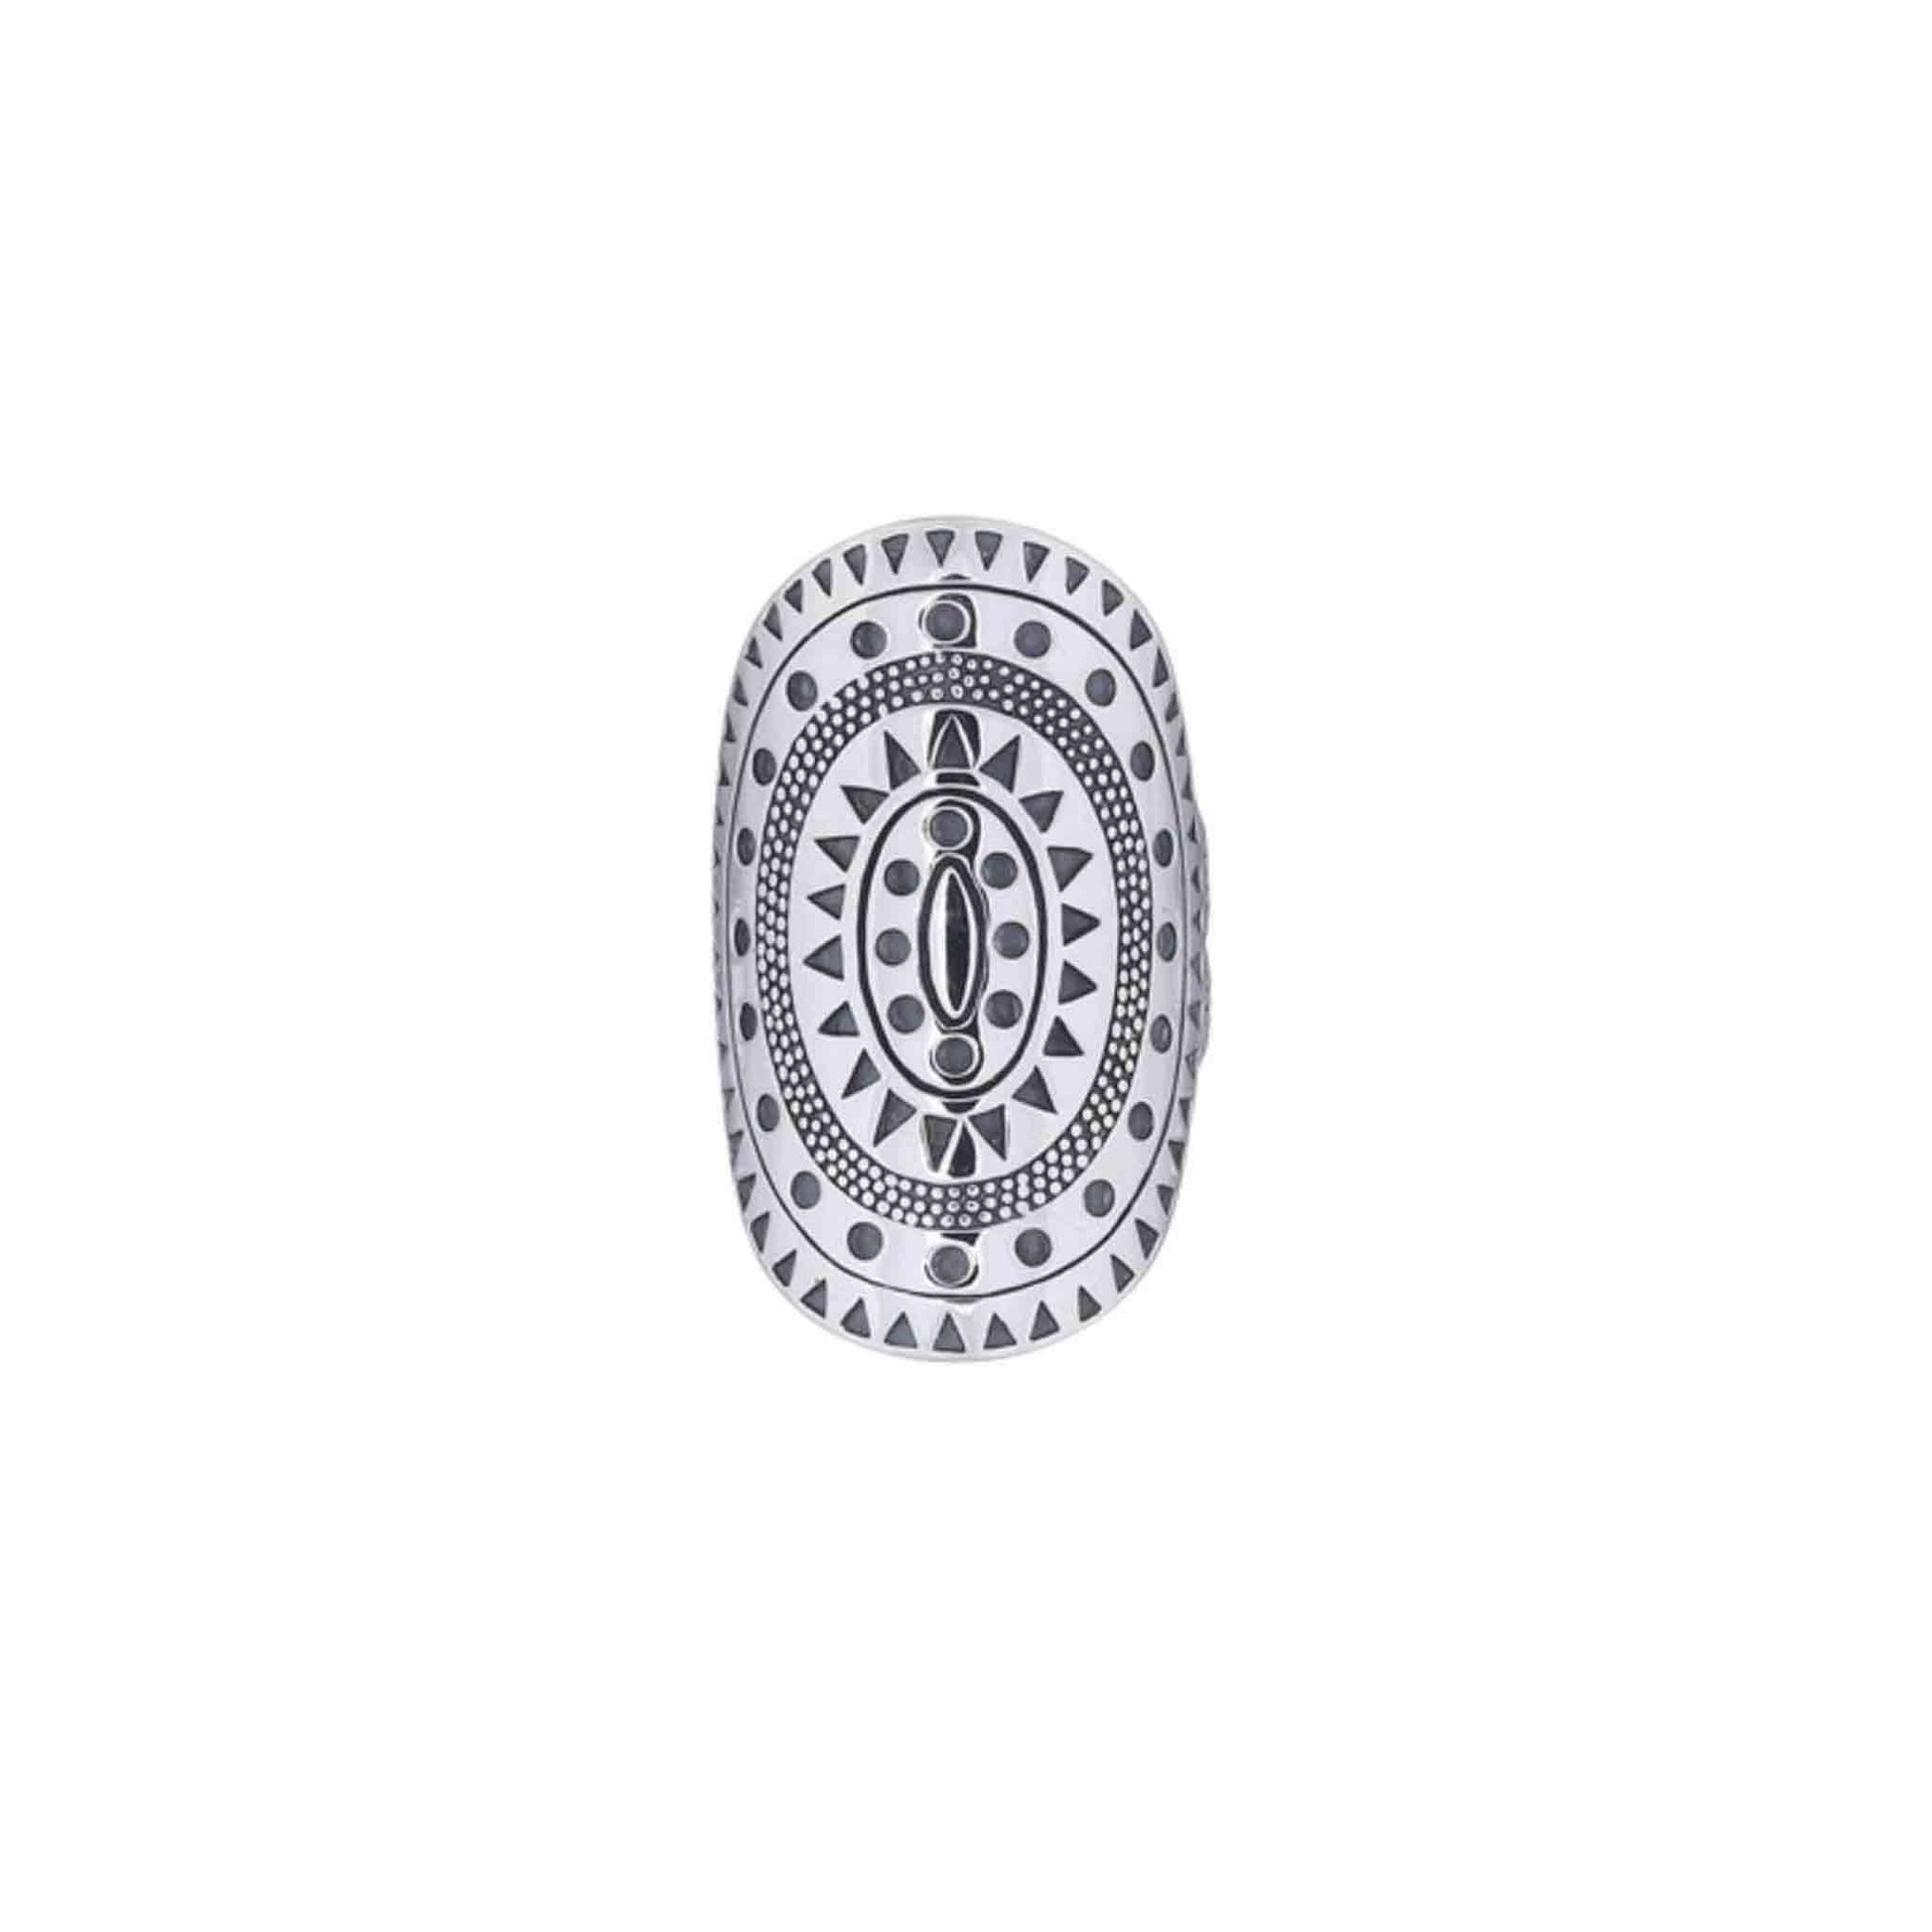 Mandala Bali Sterling Silver Ring